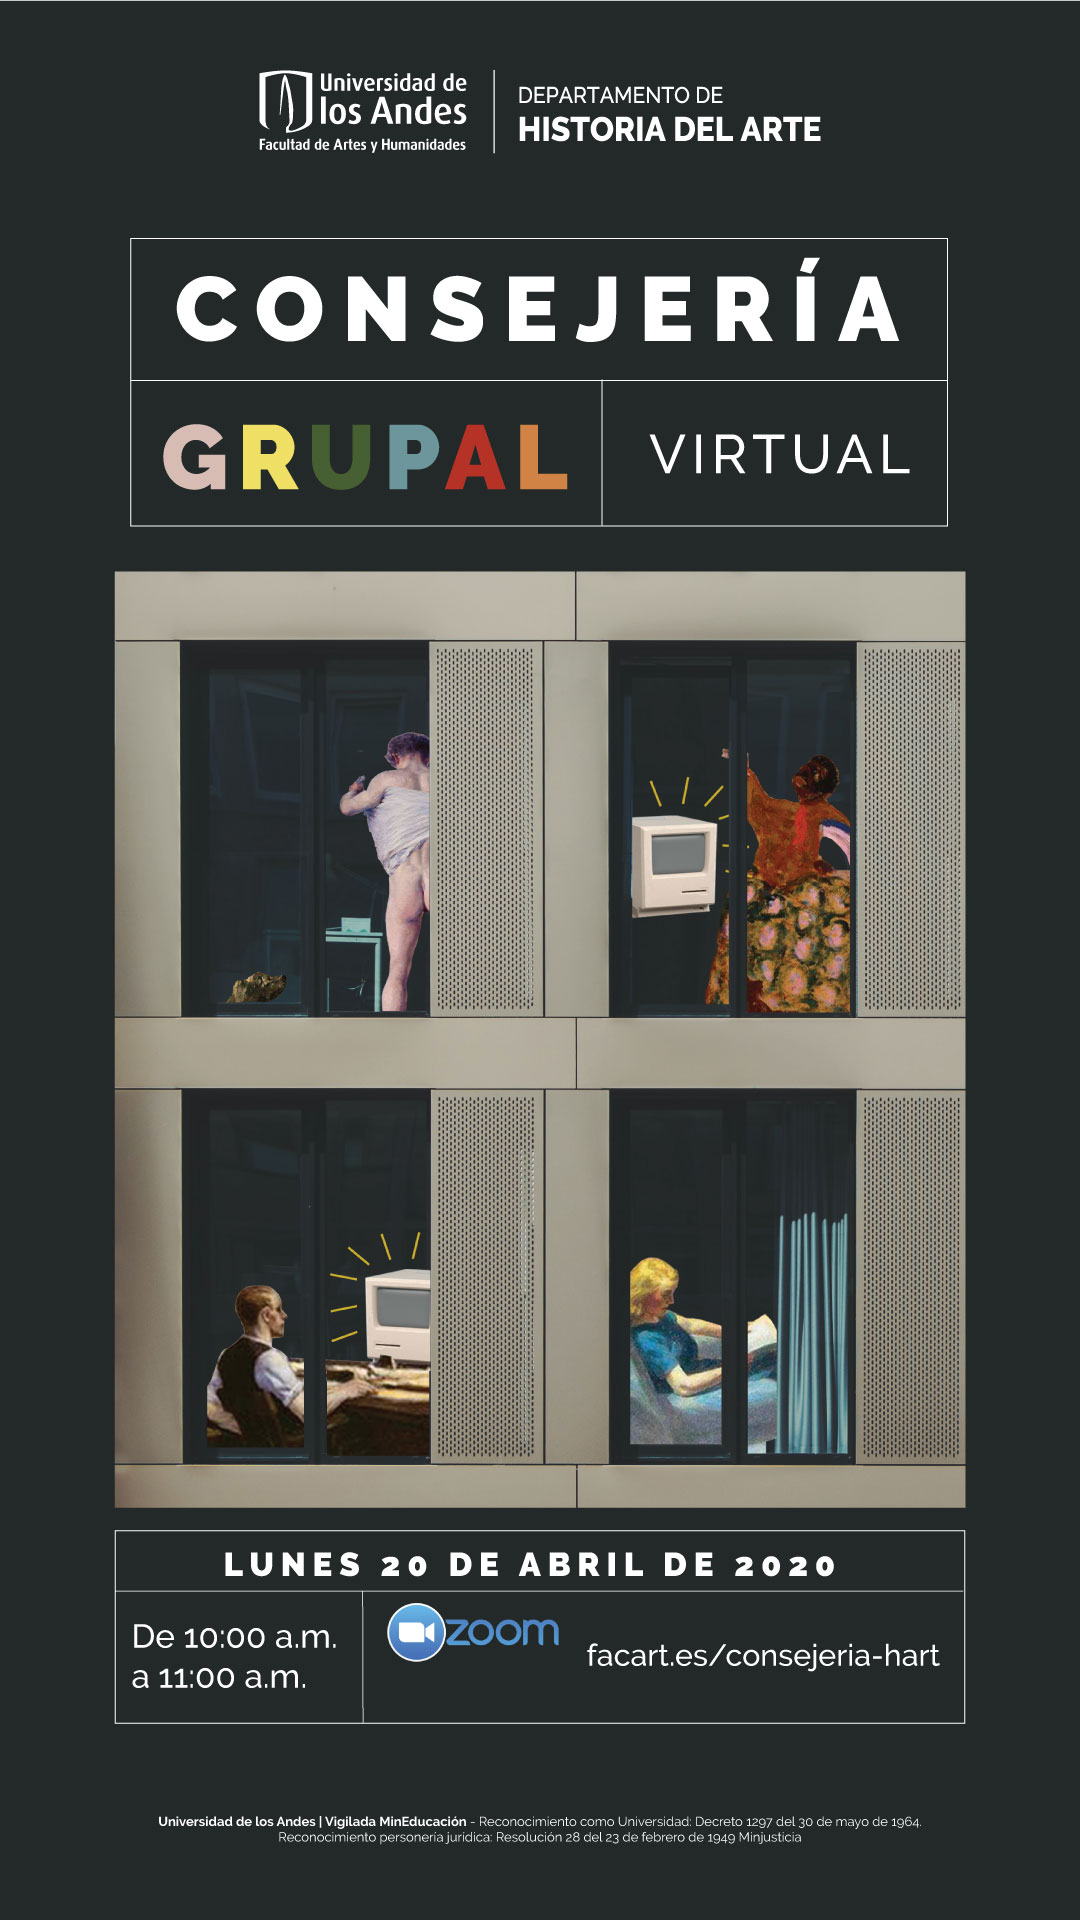 Consejería grupal virtual